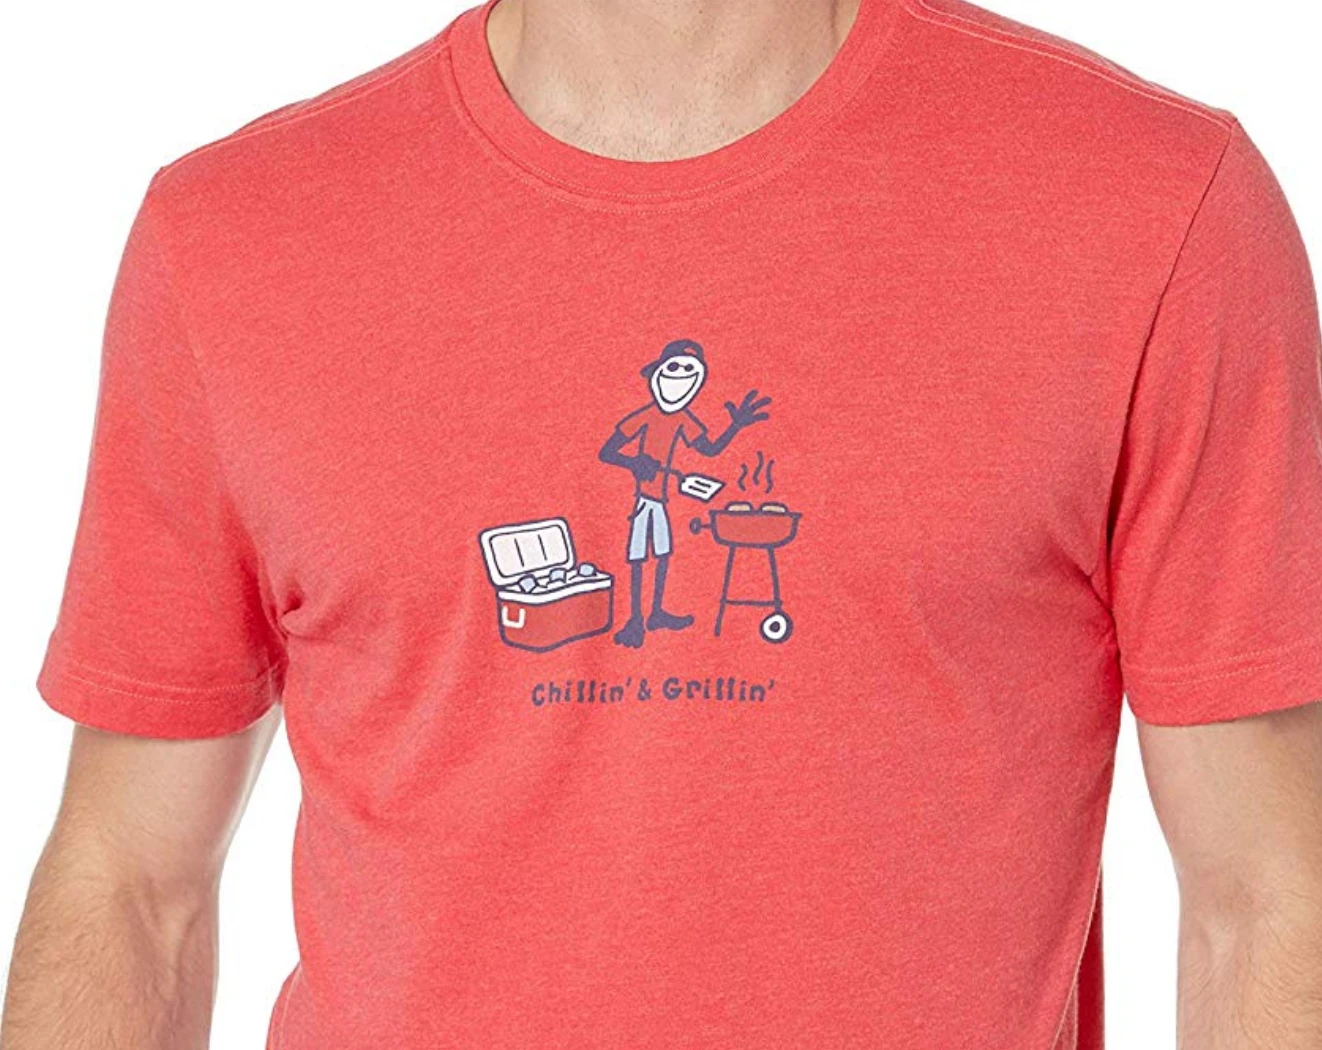 OEM service design your own t shirt, printing t shirt, organic cotton t shirt